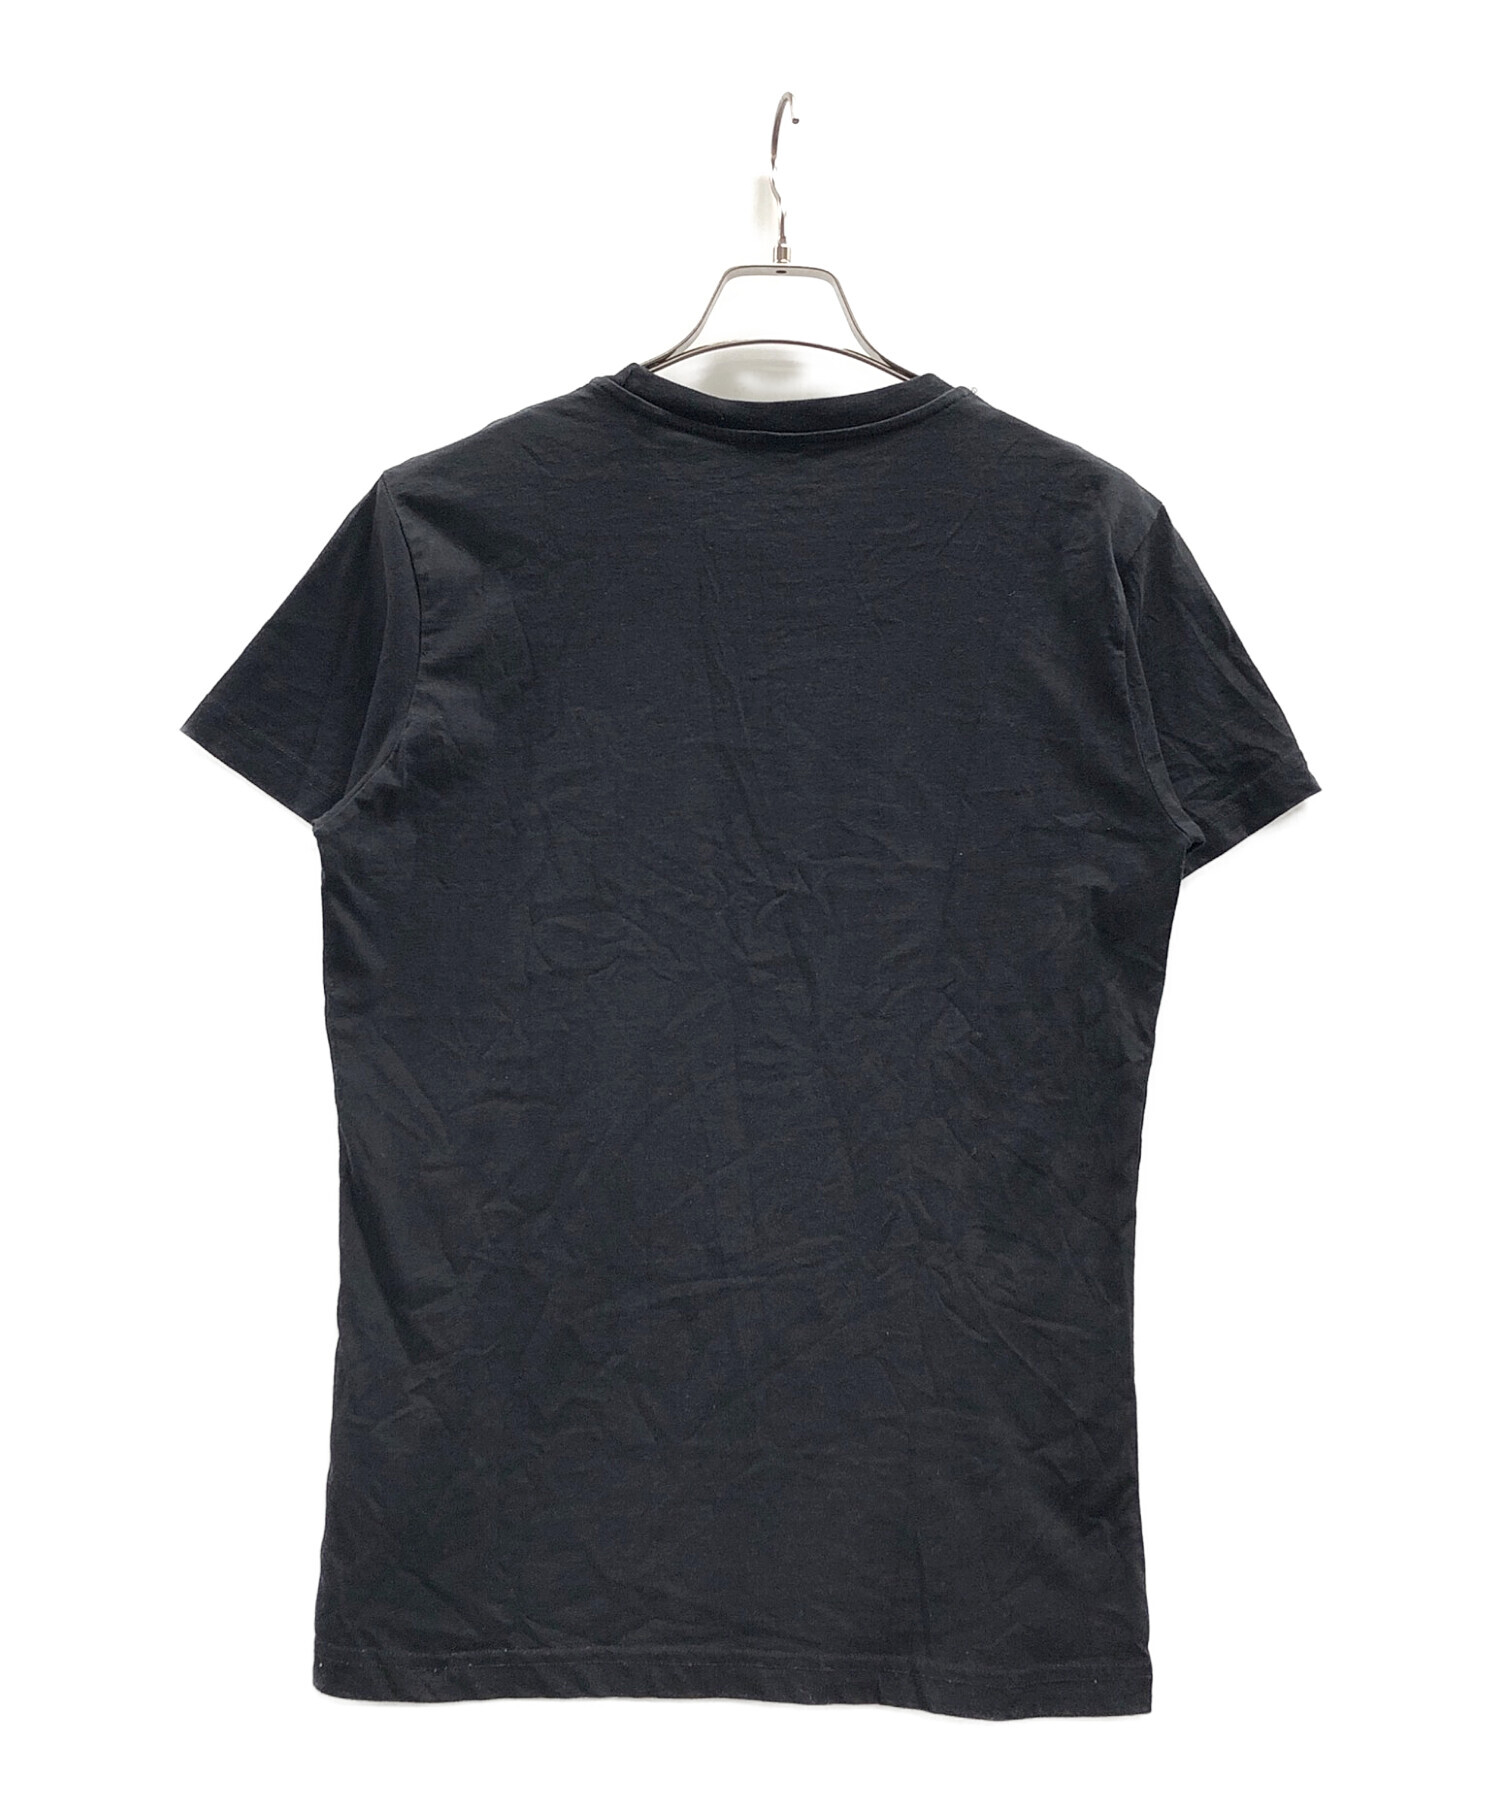 DIESEL (ディーゼル) Tシャツ ブラック サイズ:S